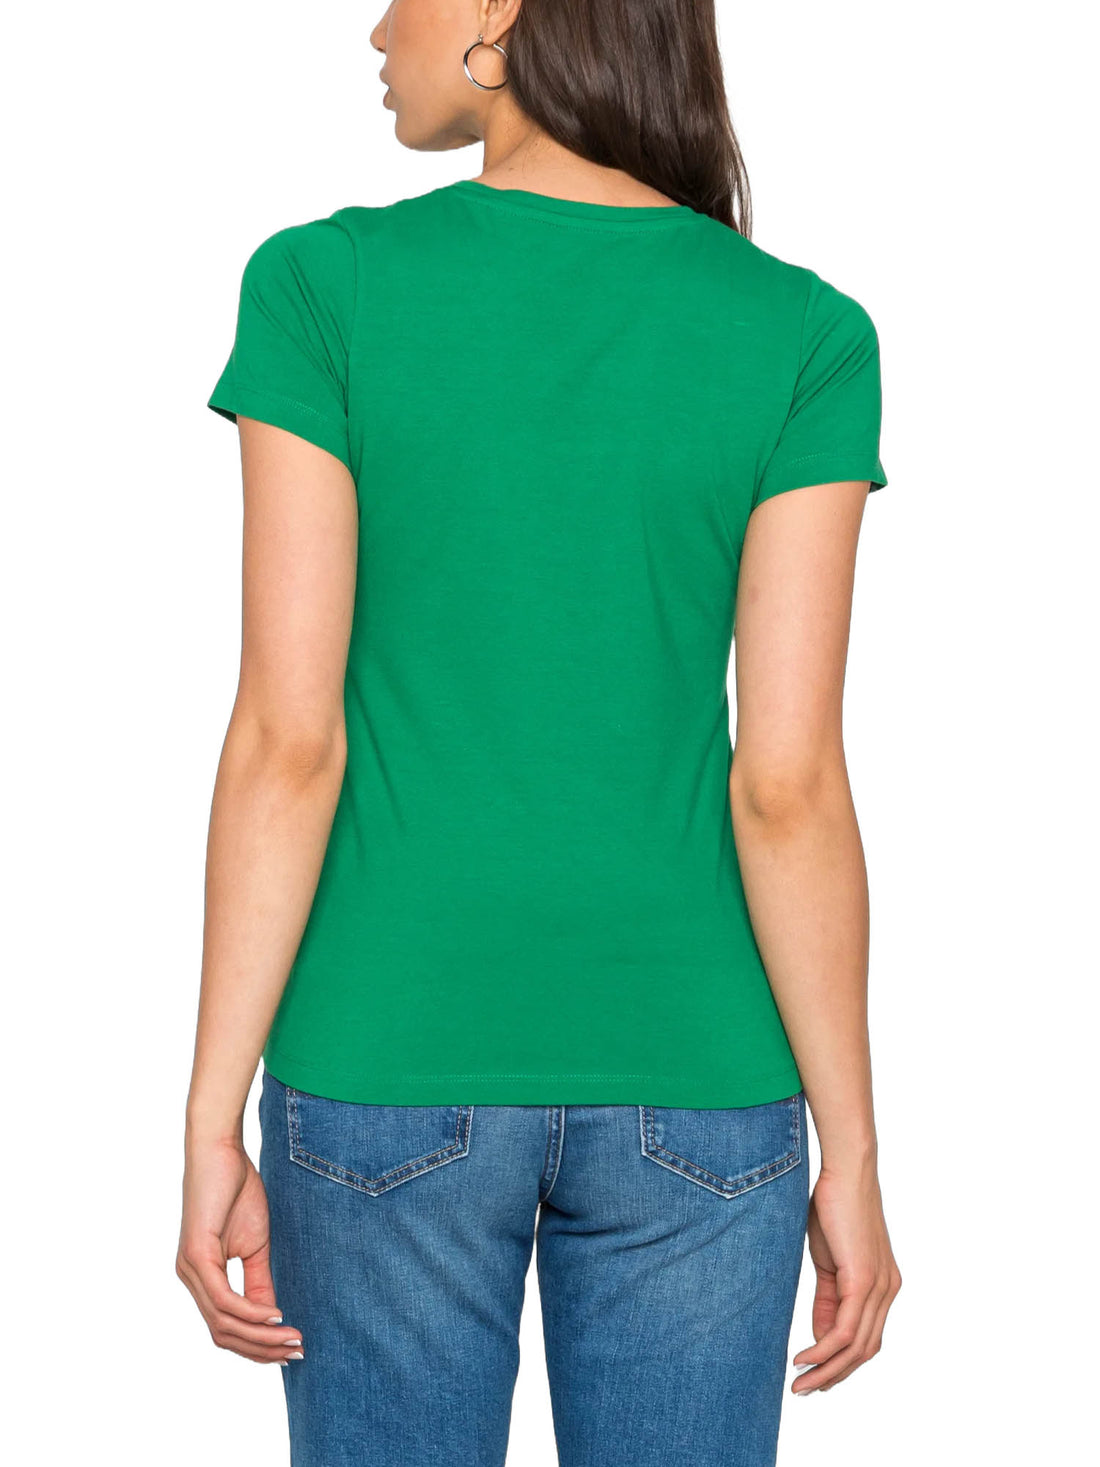 T-shirt Verde Chiaro Pepe Jeans